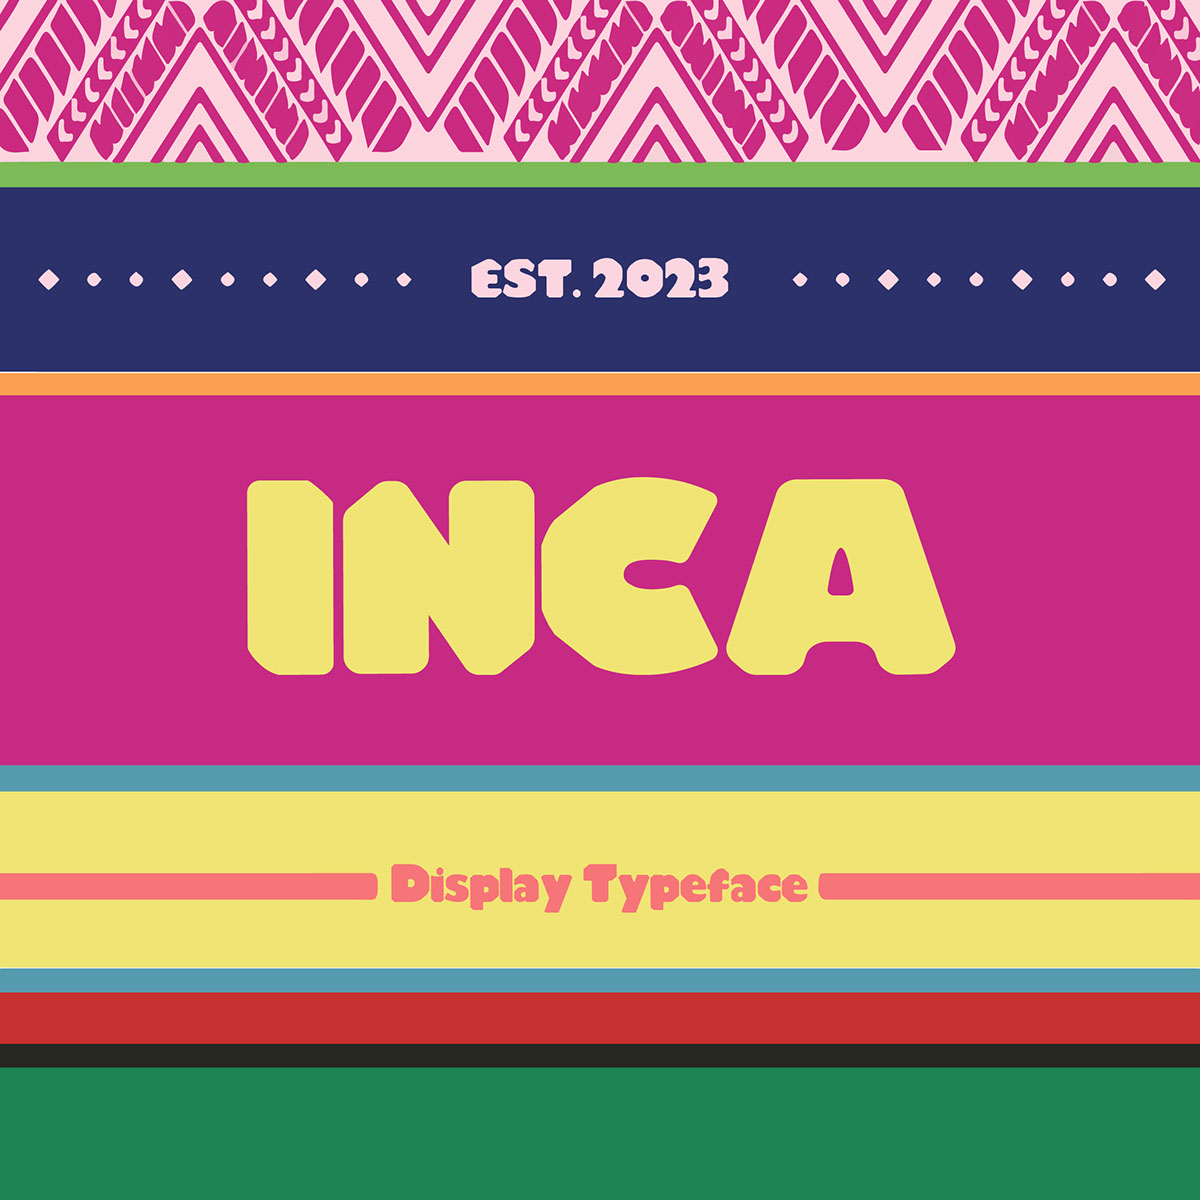 INCA rendition image